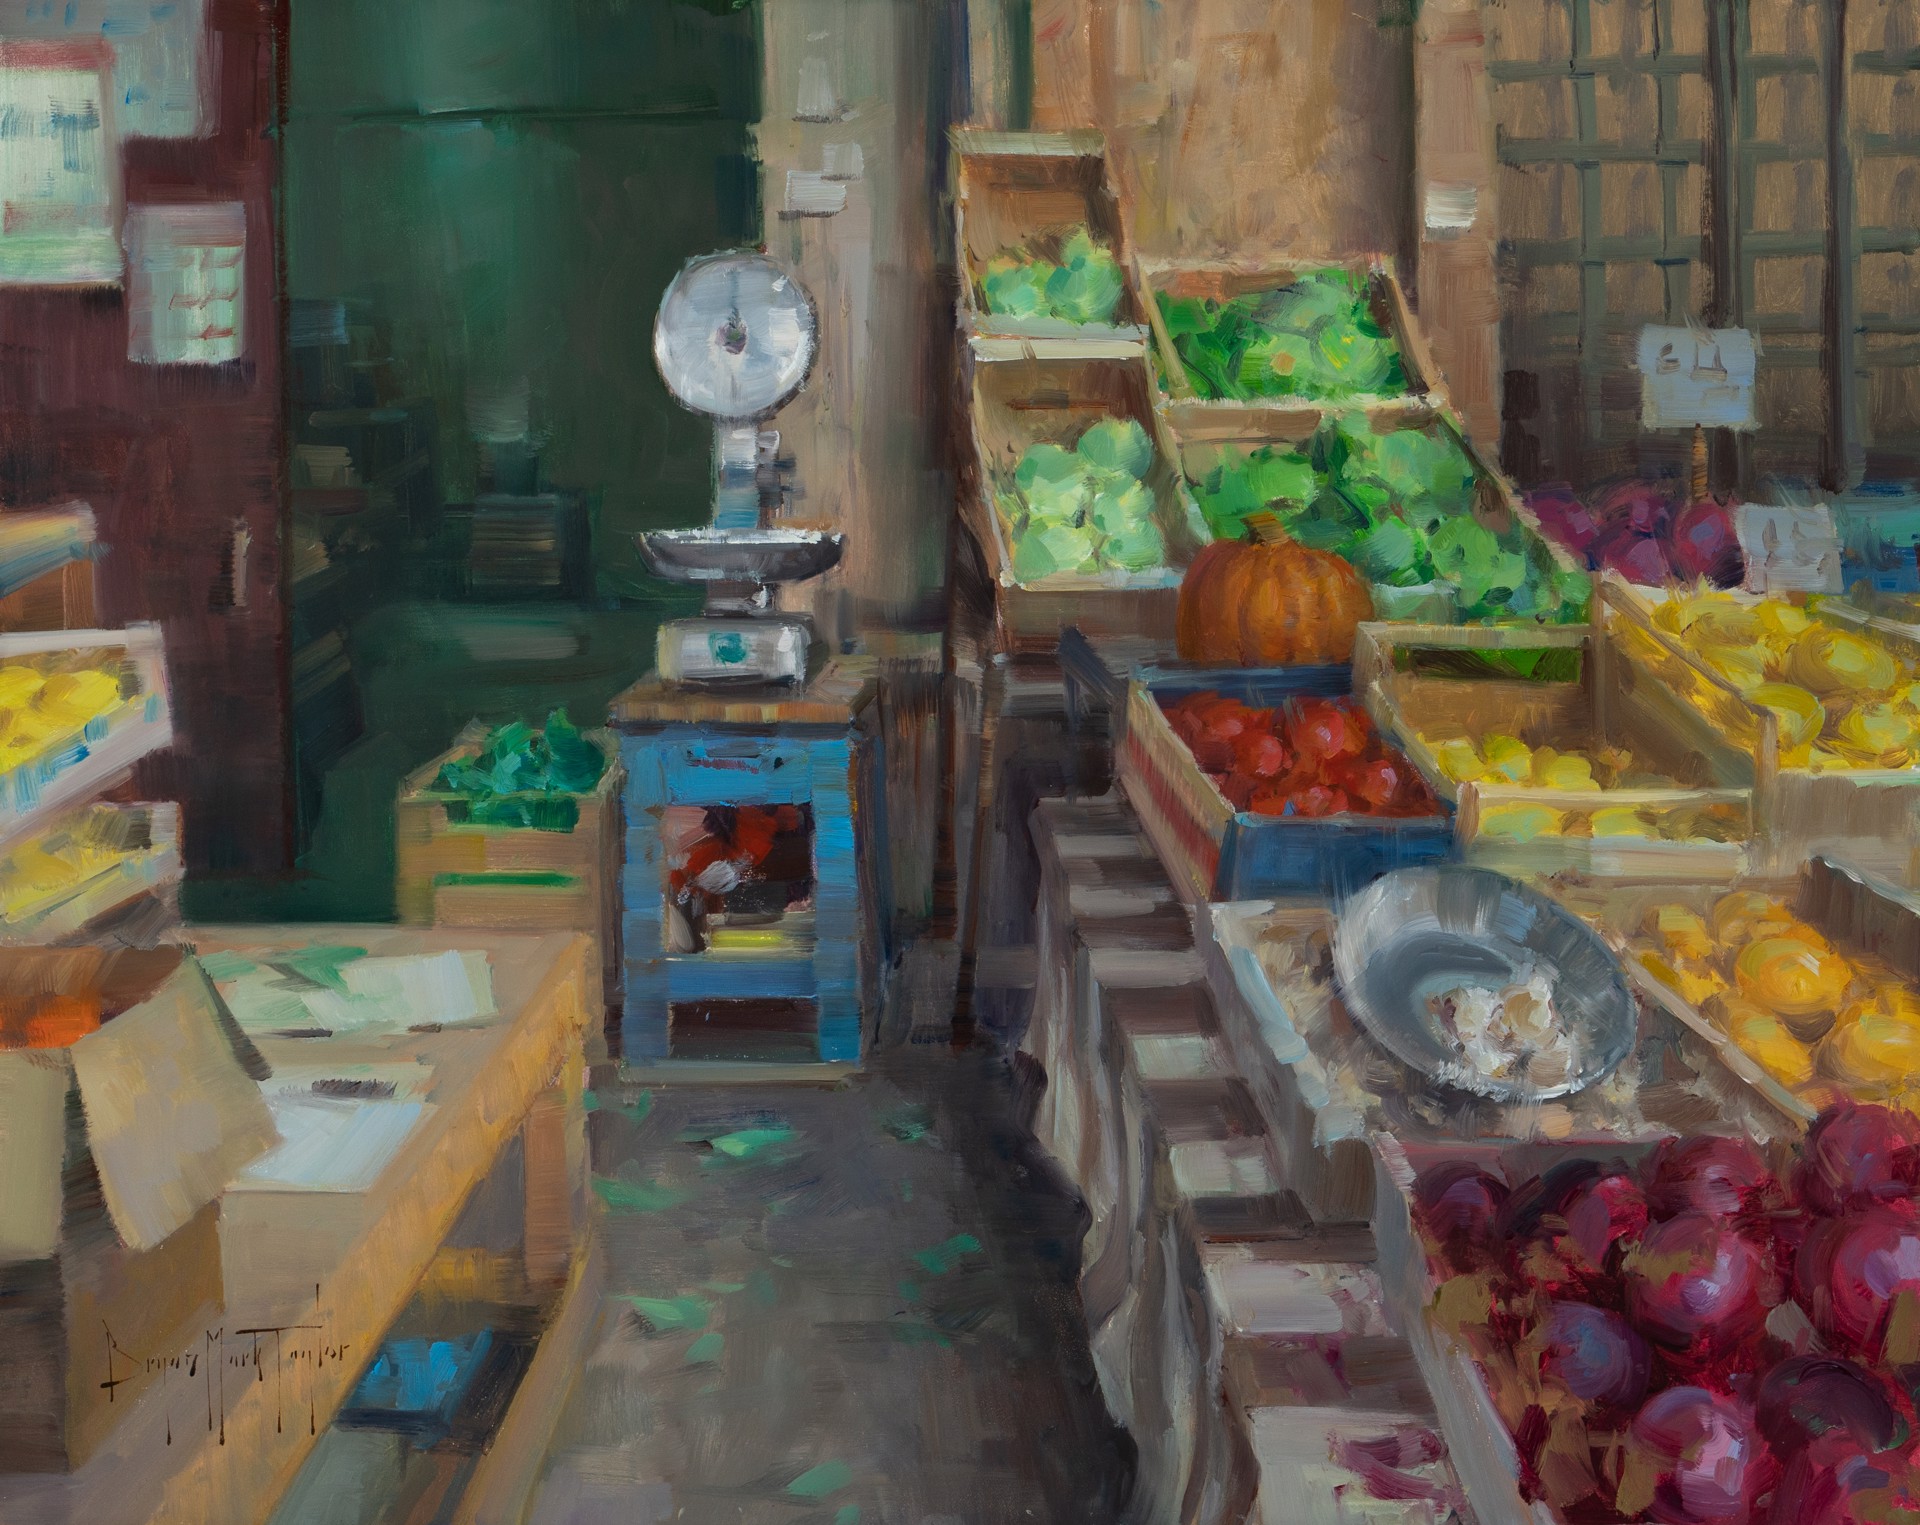 Vintage Produce Market by Bryan Mark Taylor